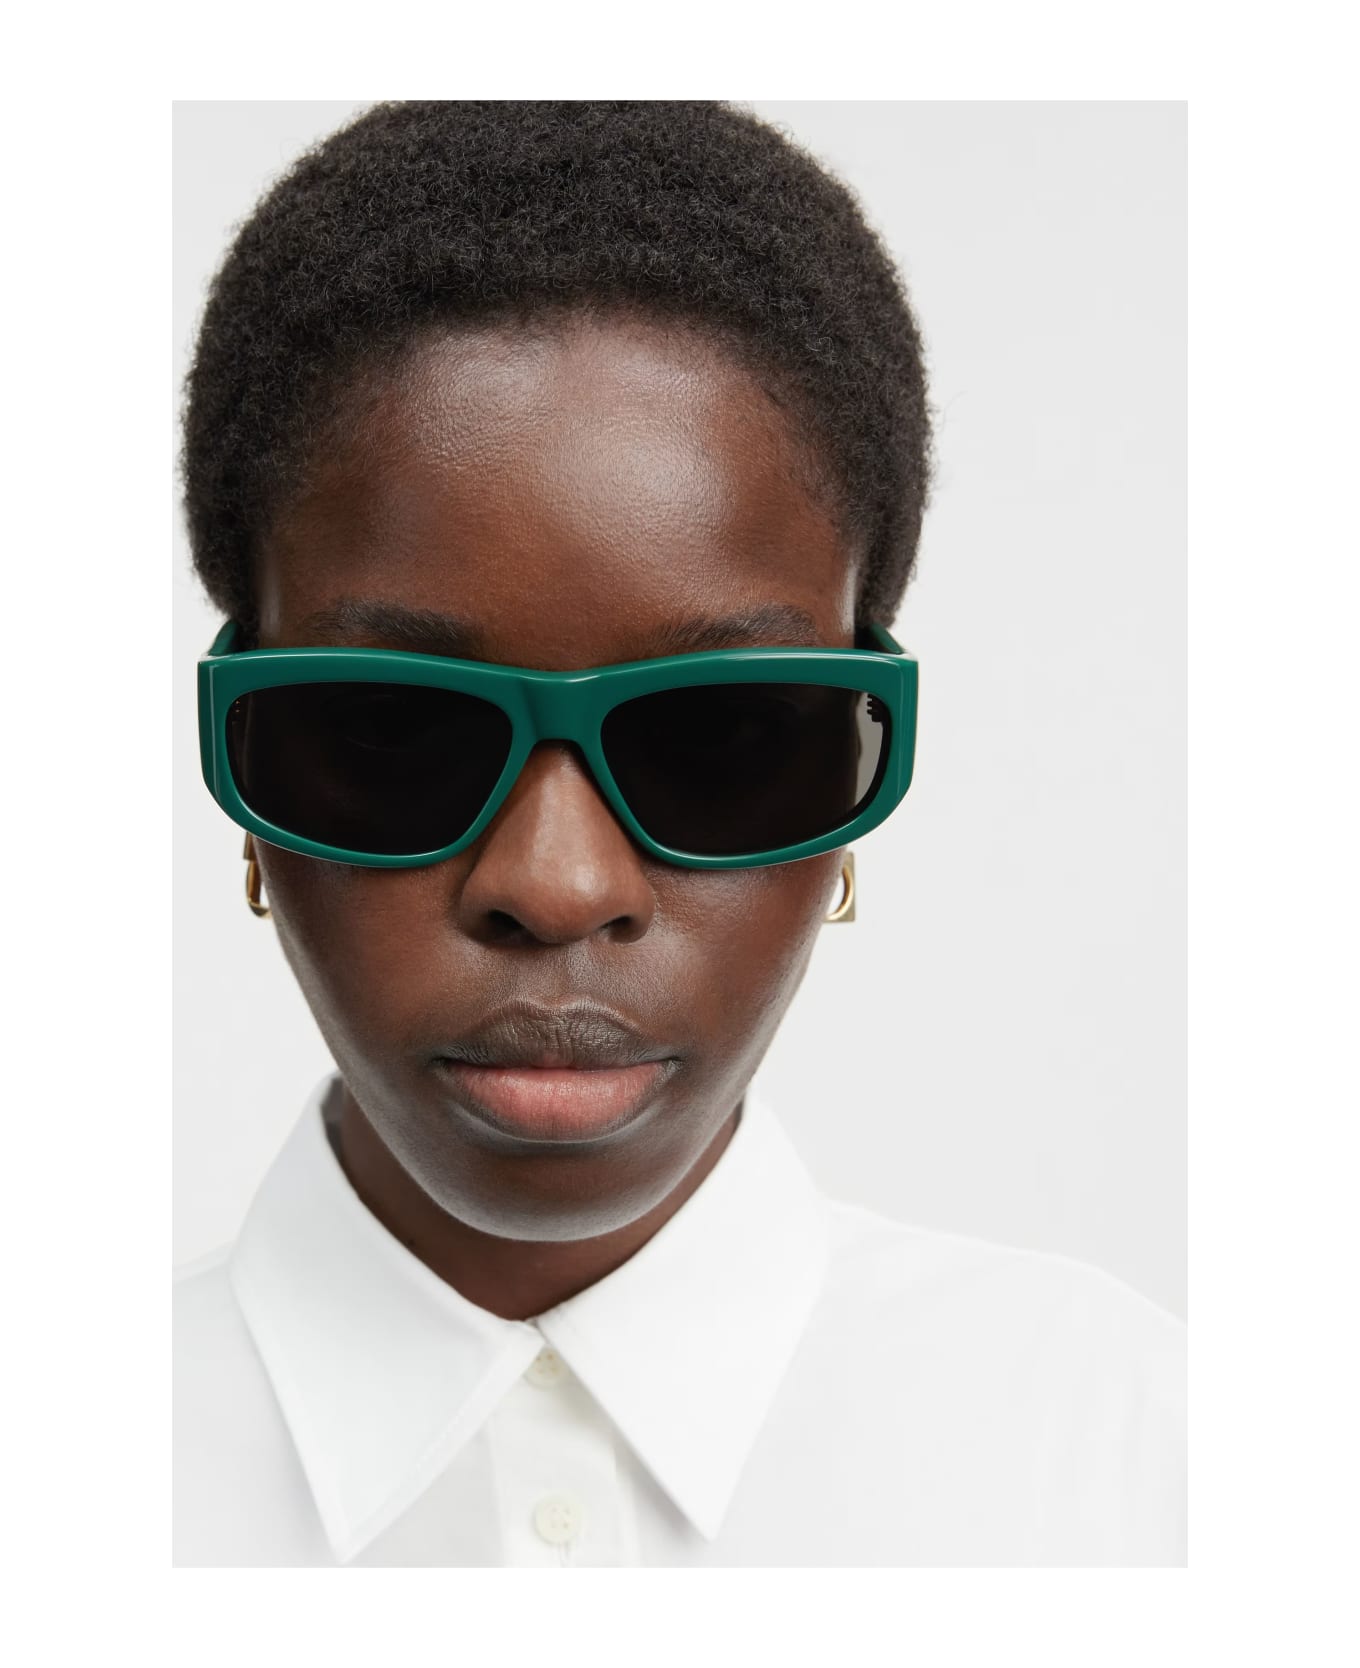 Jacquemus Pilota - Green Sunglasses - green